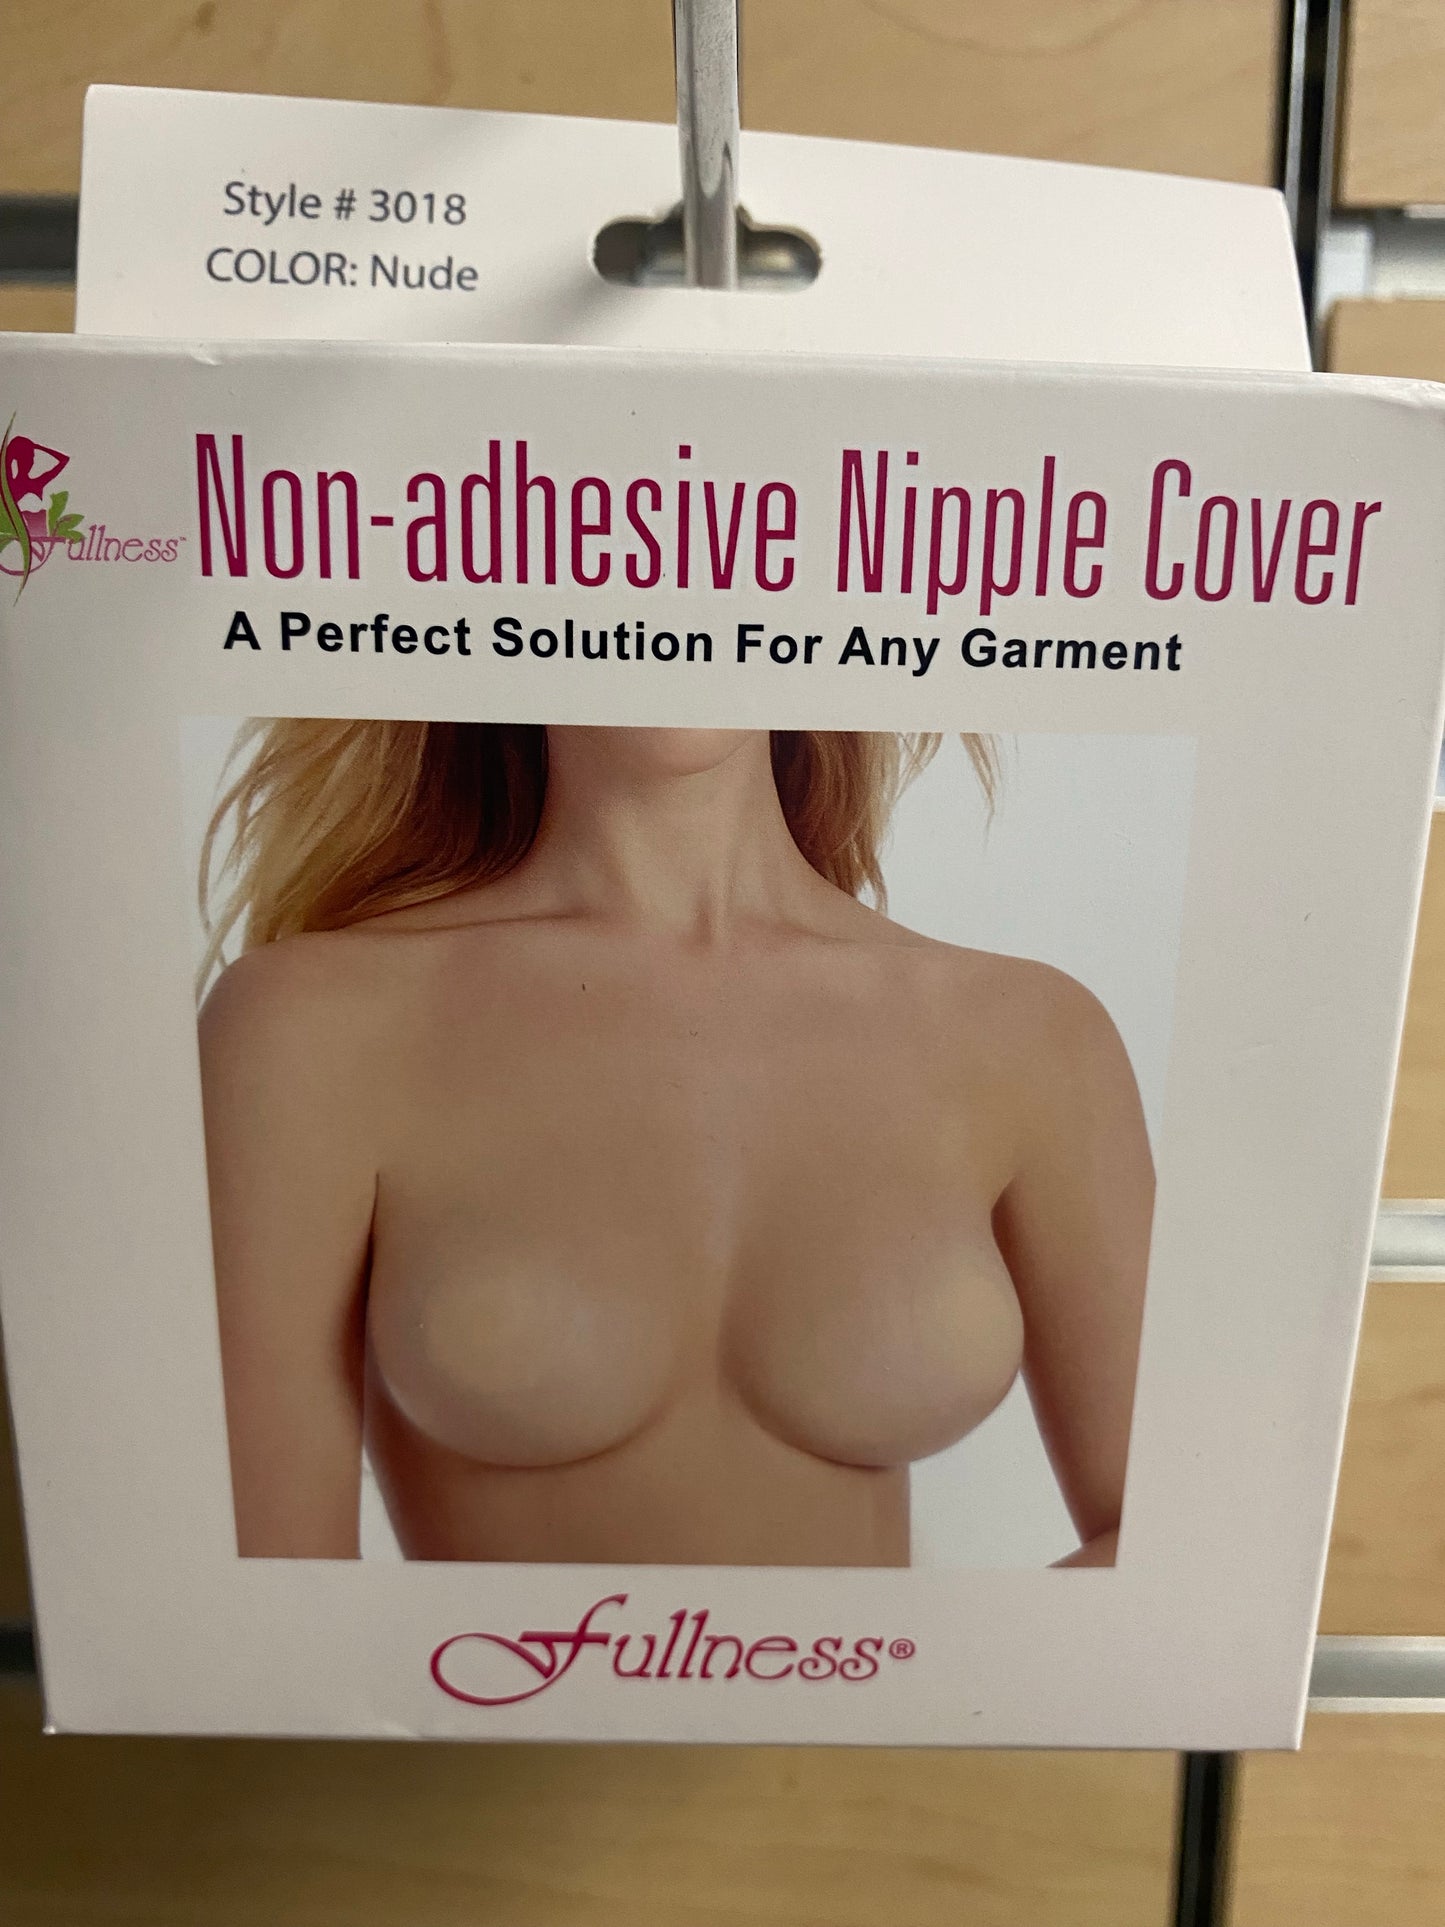 Non- adhesive nipple covers